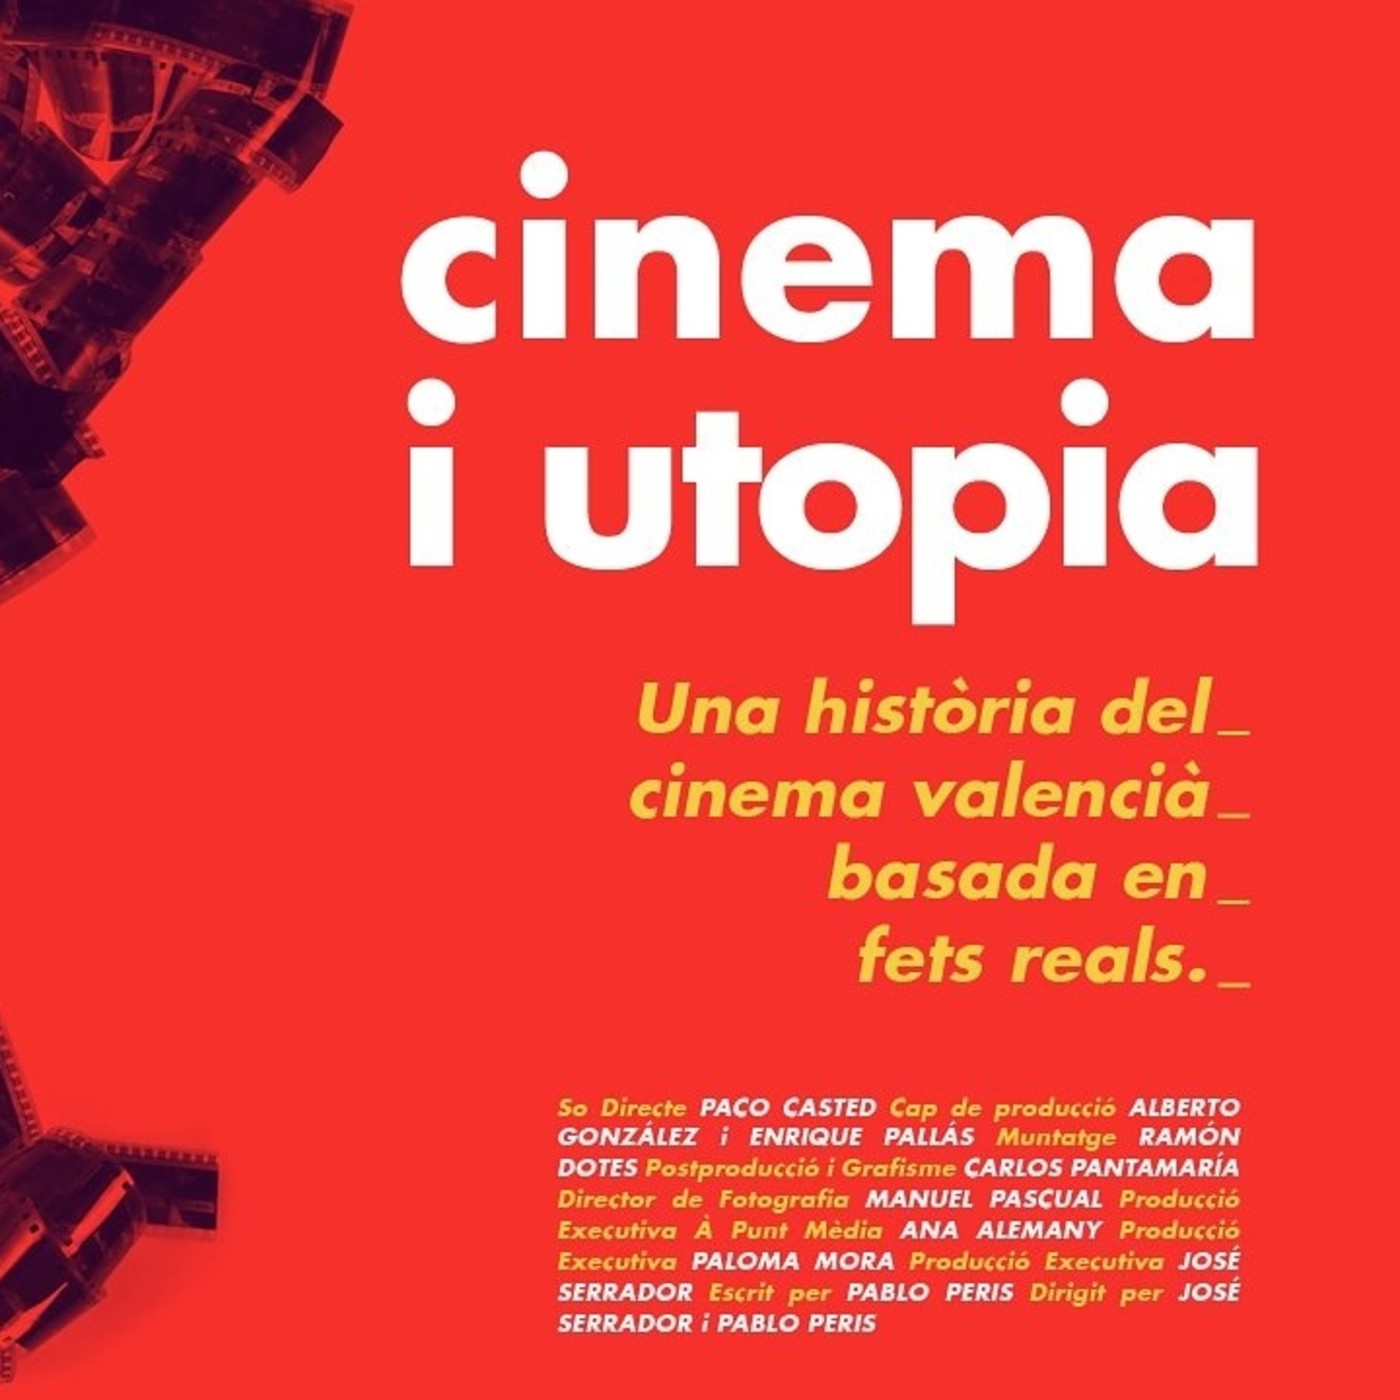 Caratula de Cinema i utopia (Cinema and Utopia) 